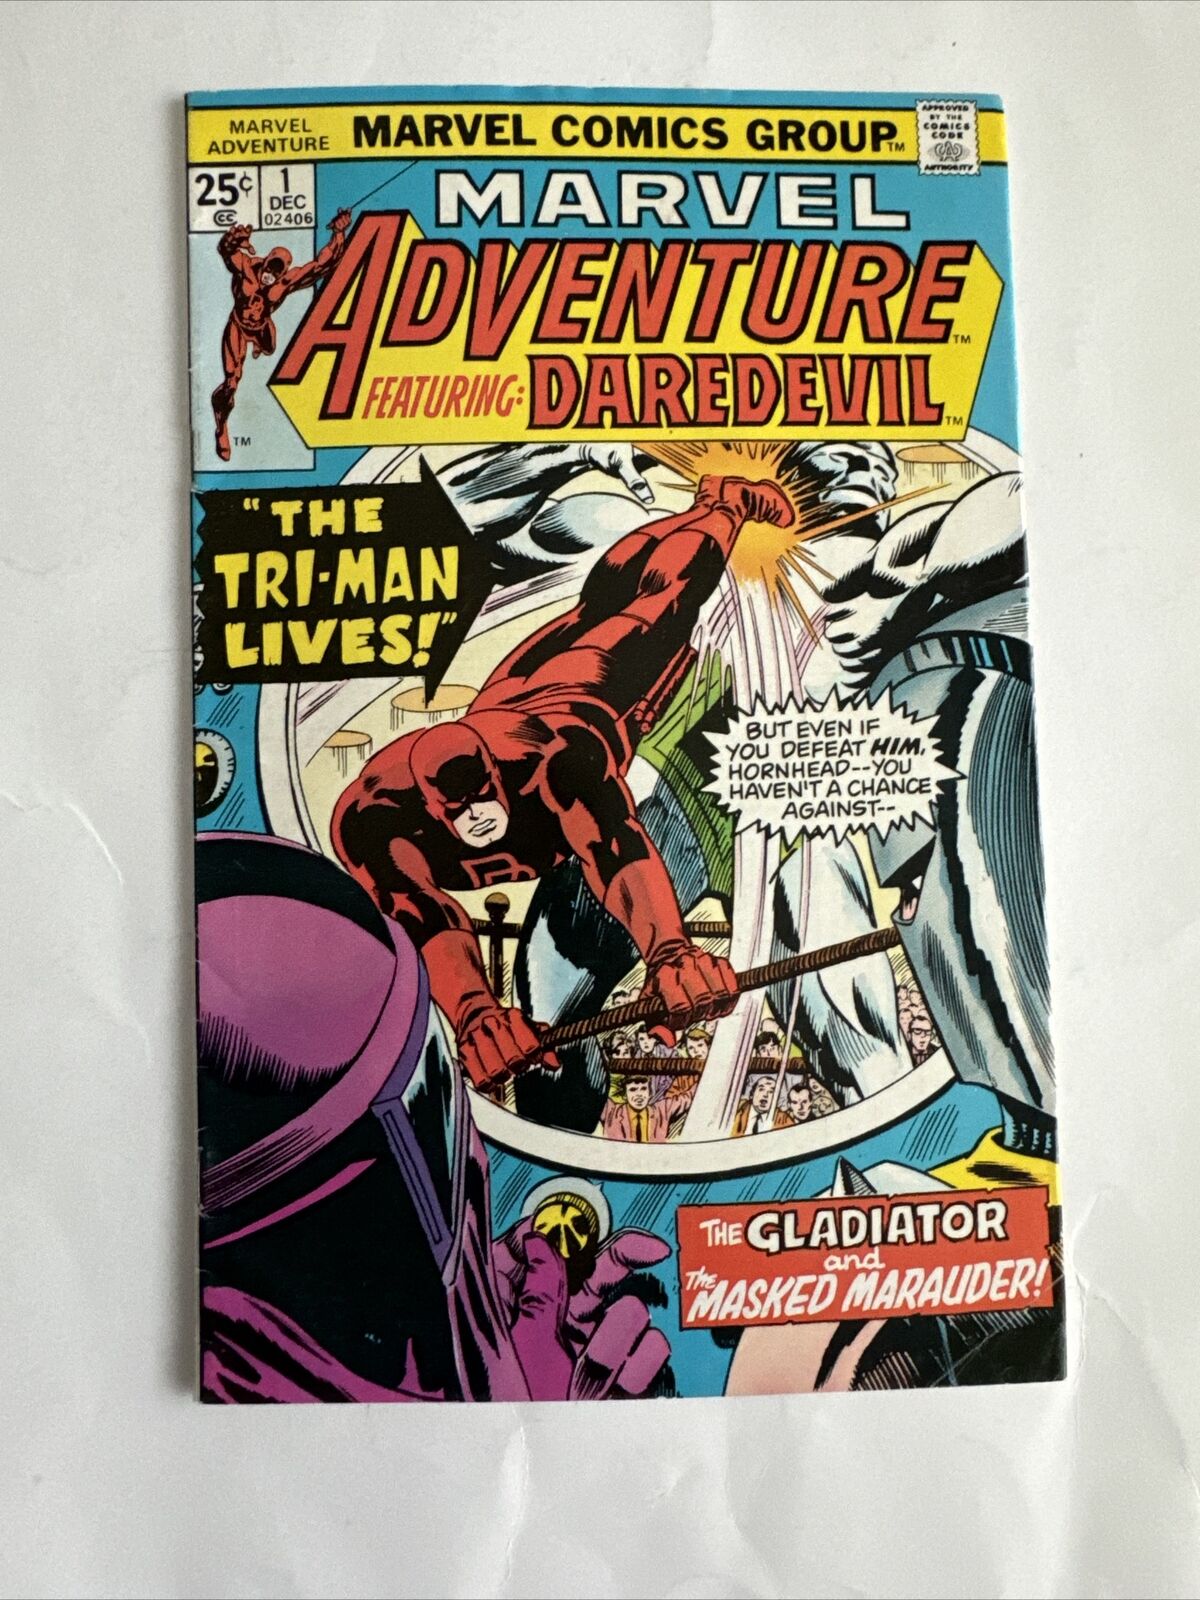 Marvel Adventure featuring Daredevil #1 (1977 Marvel) 1st App Gladiator